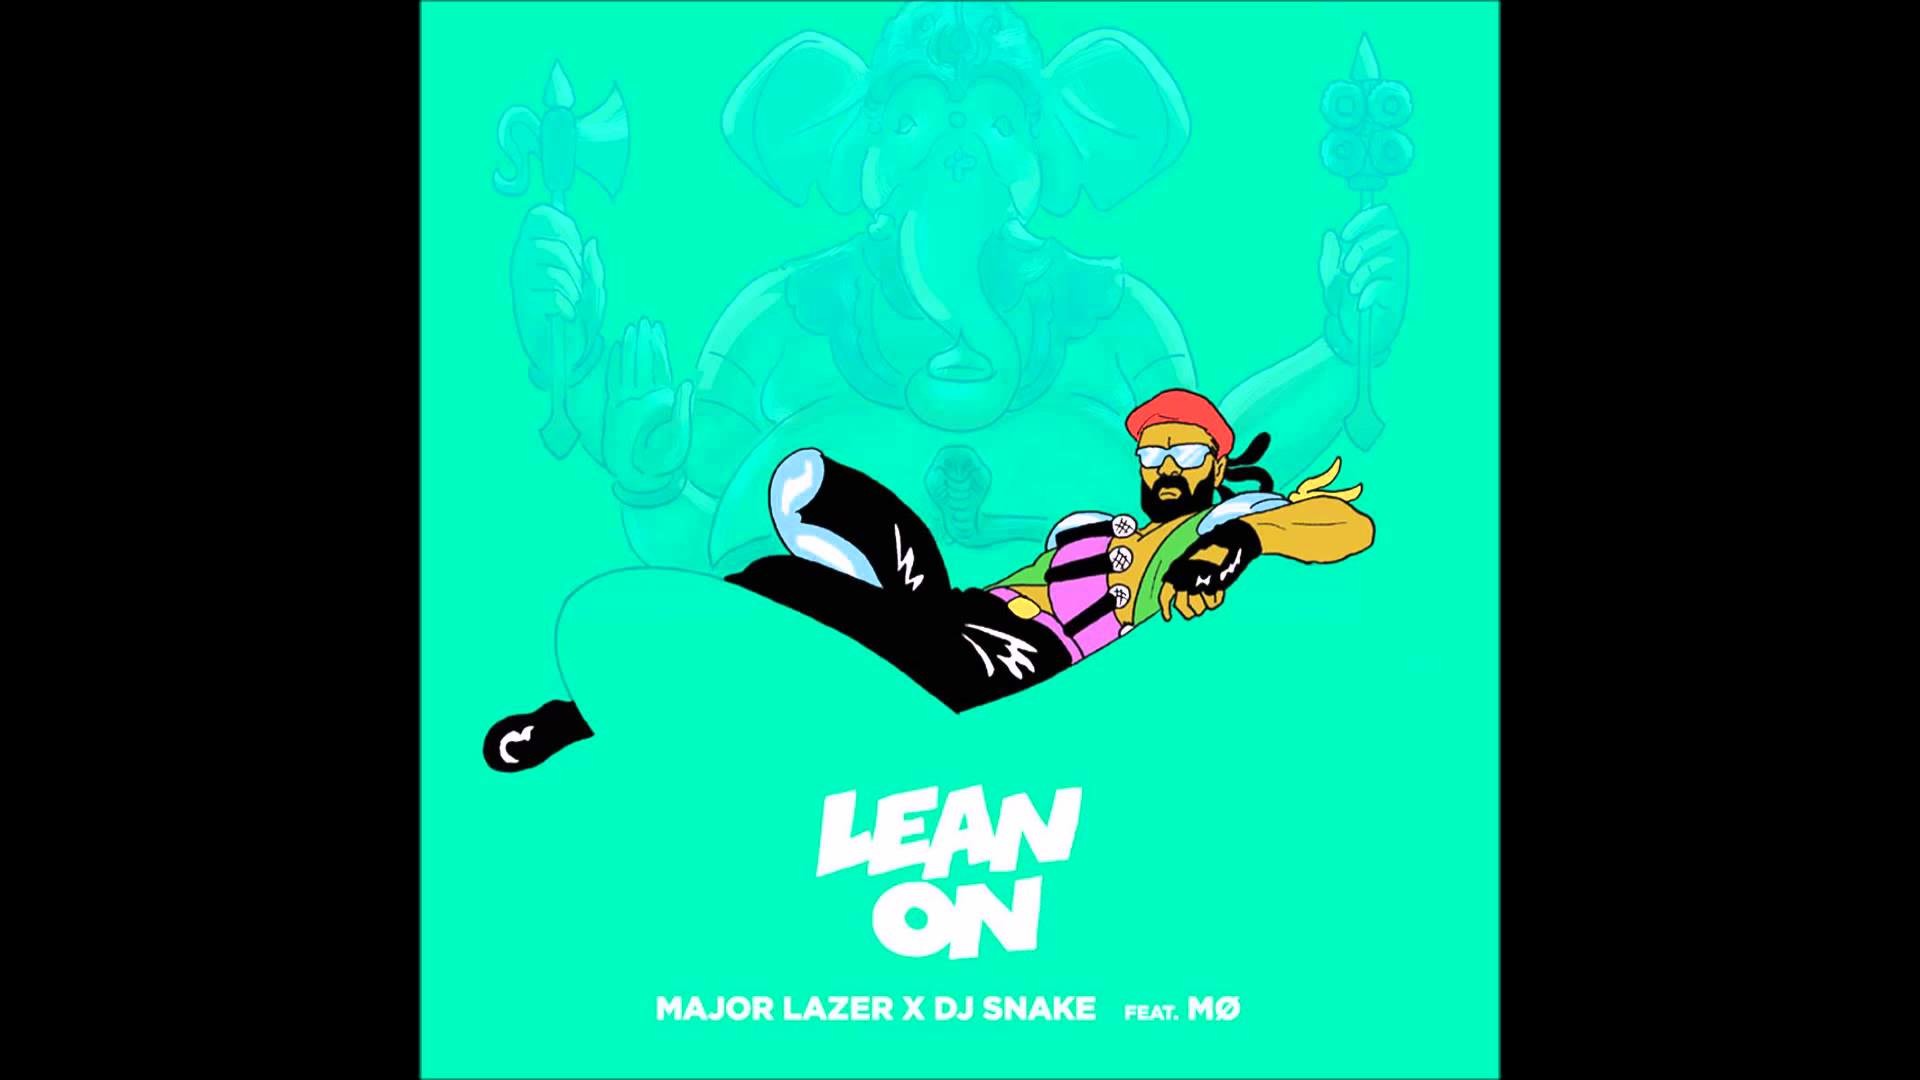 Major lazer remix. Lean on Major Lazer. Leon on- Major Lazer. Lean on обложка. Major Lazer DJ Snake.